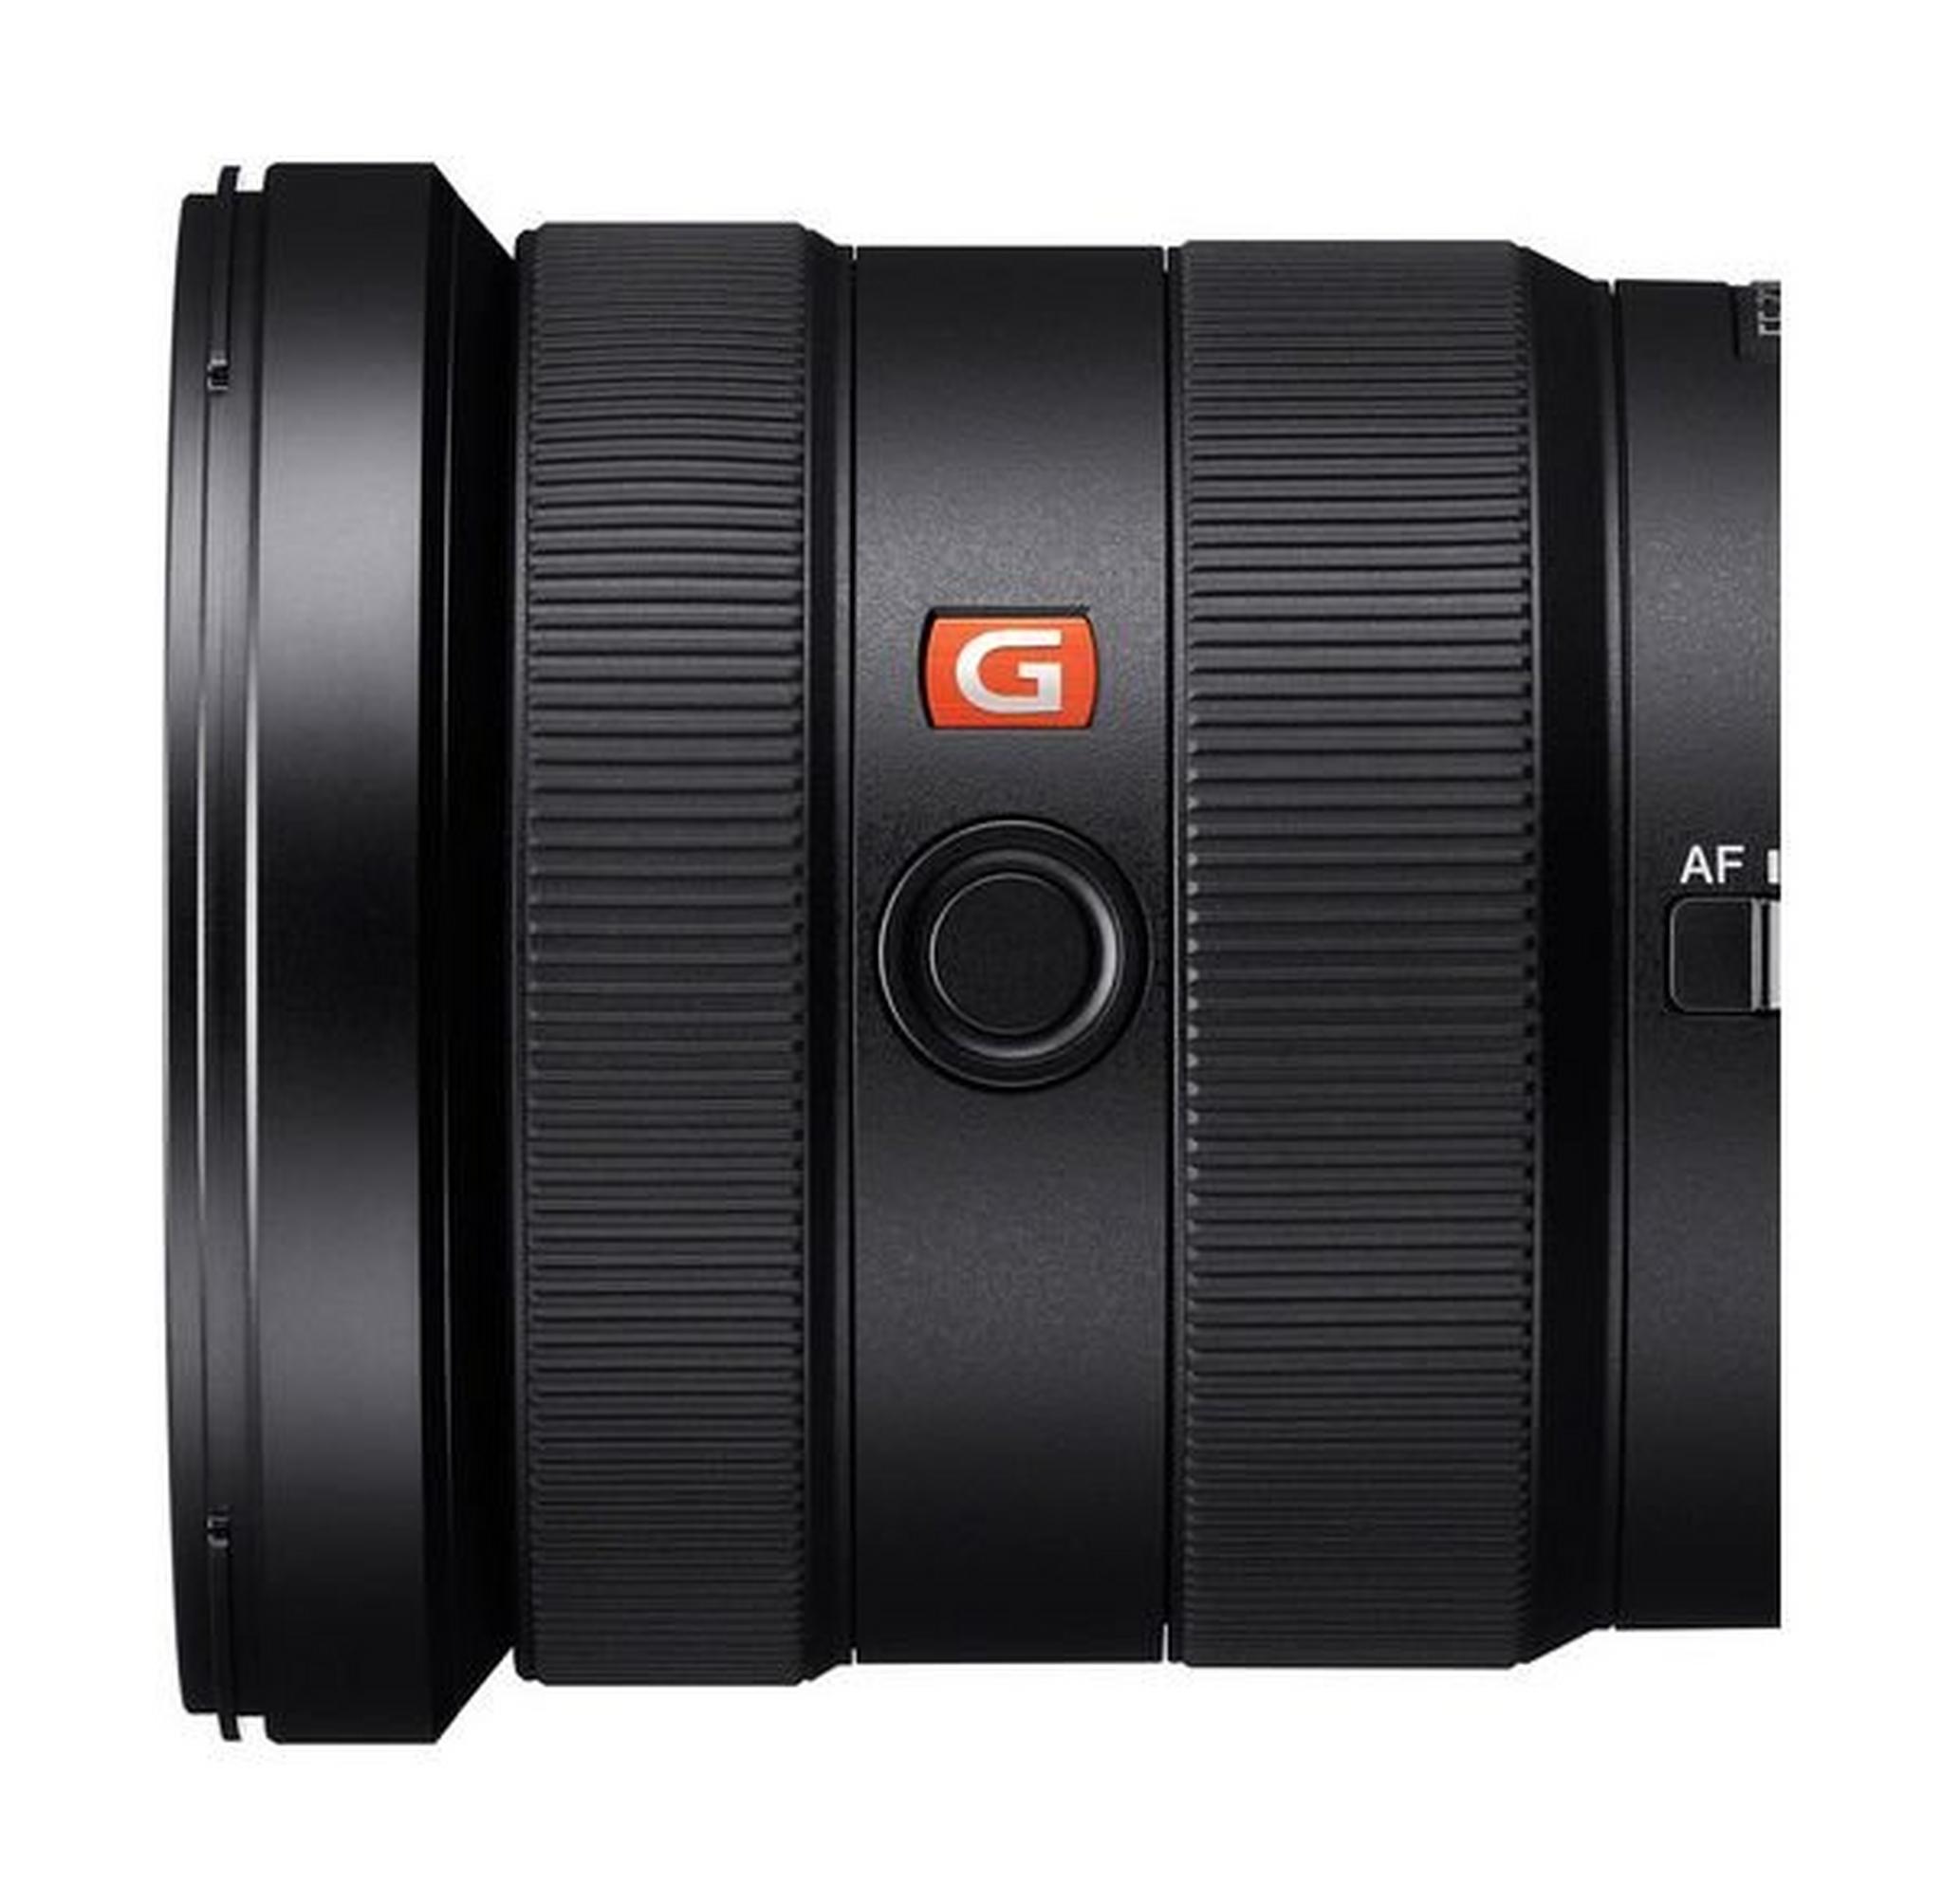 Sony 16-35mm F/2.8 Autofocus Lens (SEL1635GM) - Black